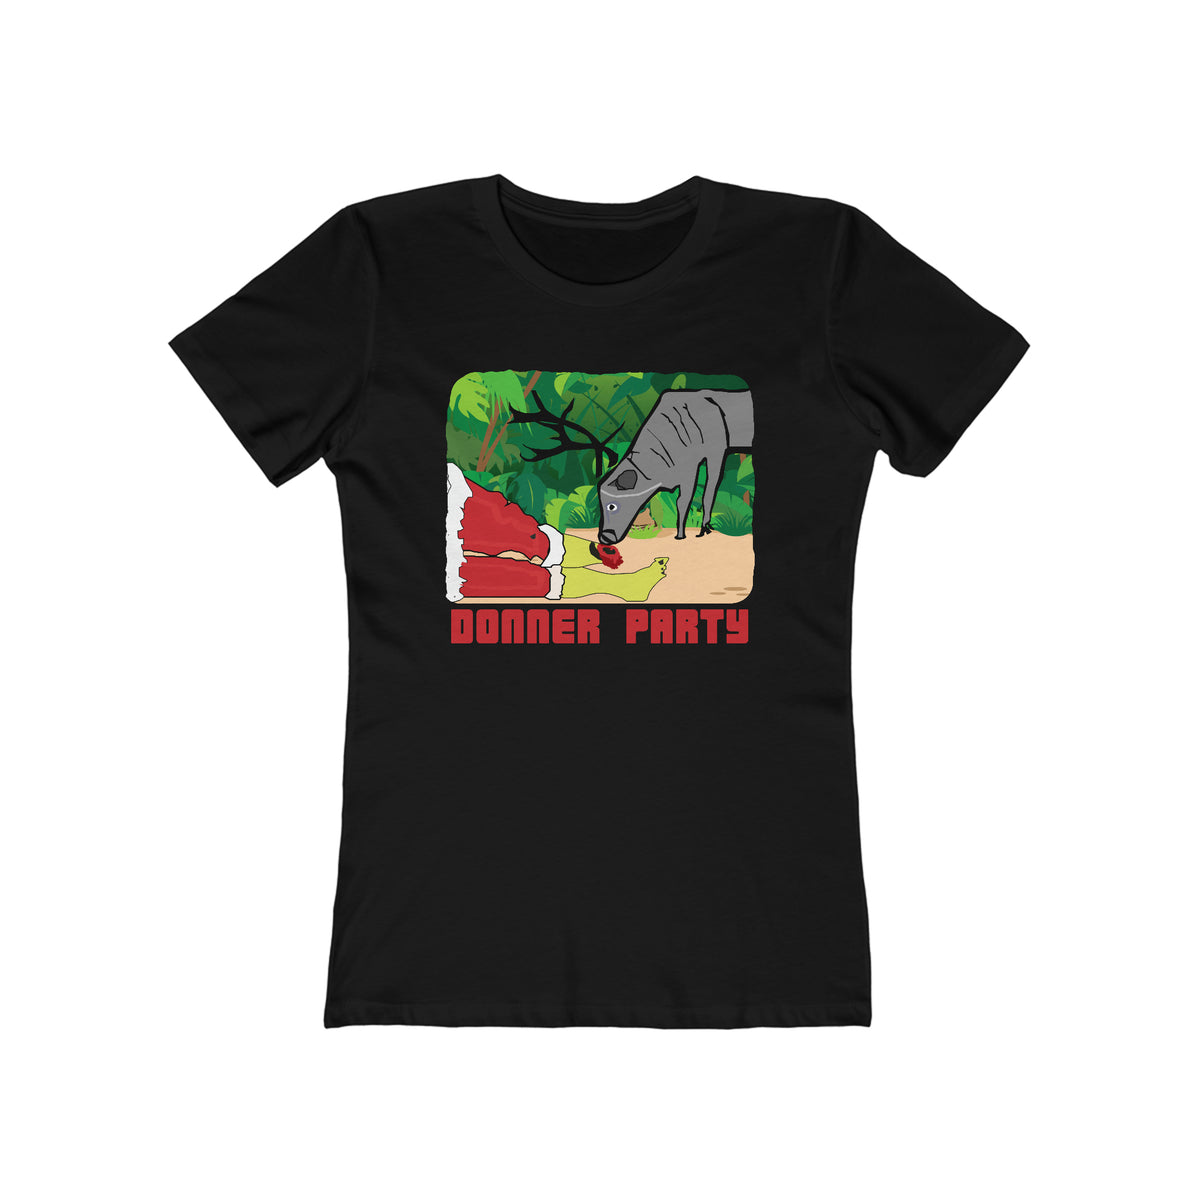 Donner Party - Women’s T-Shirt